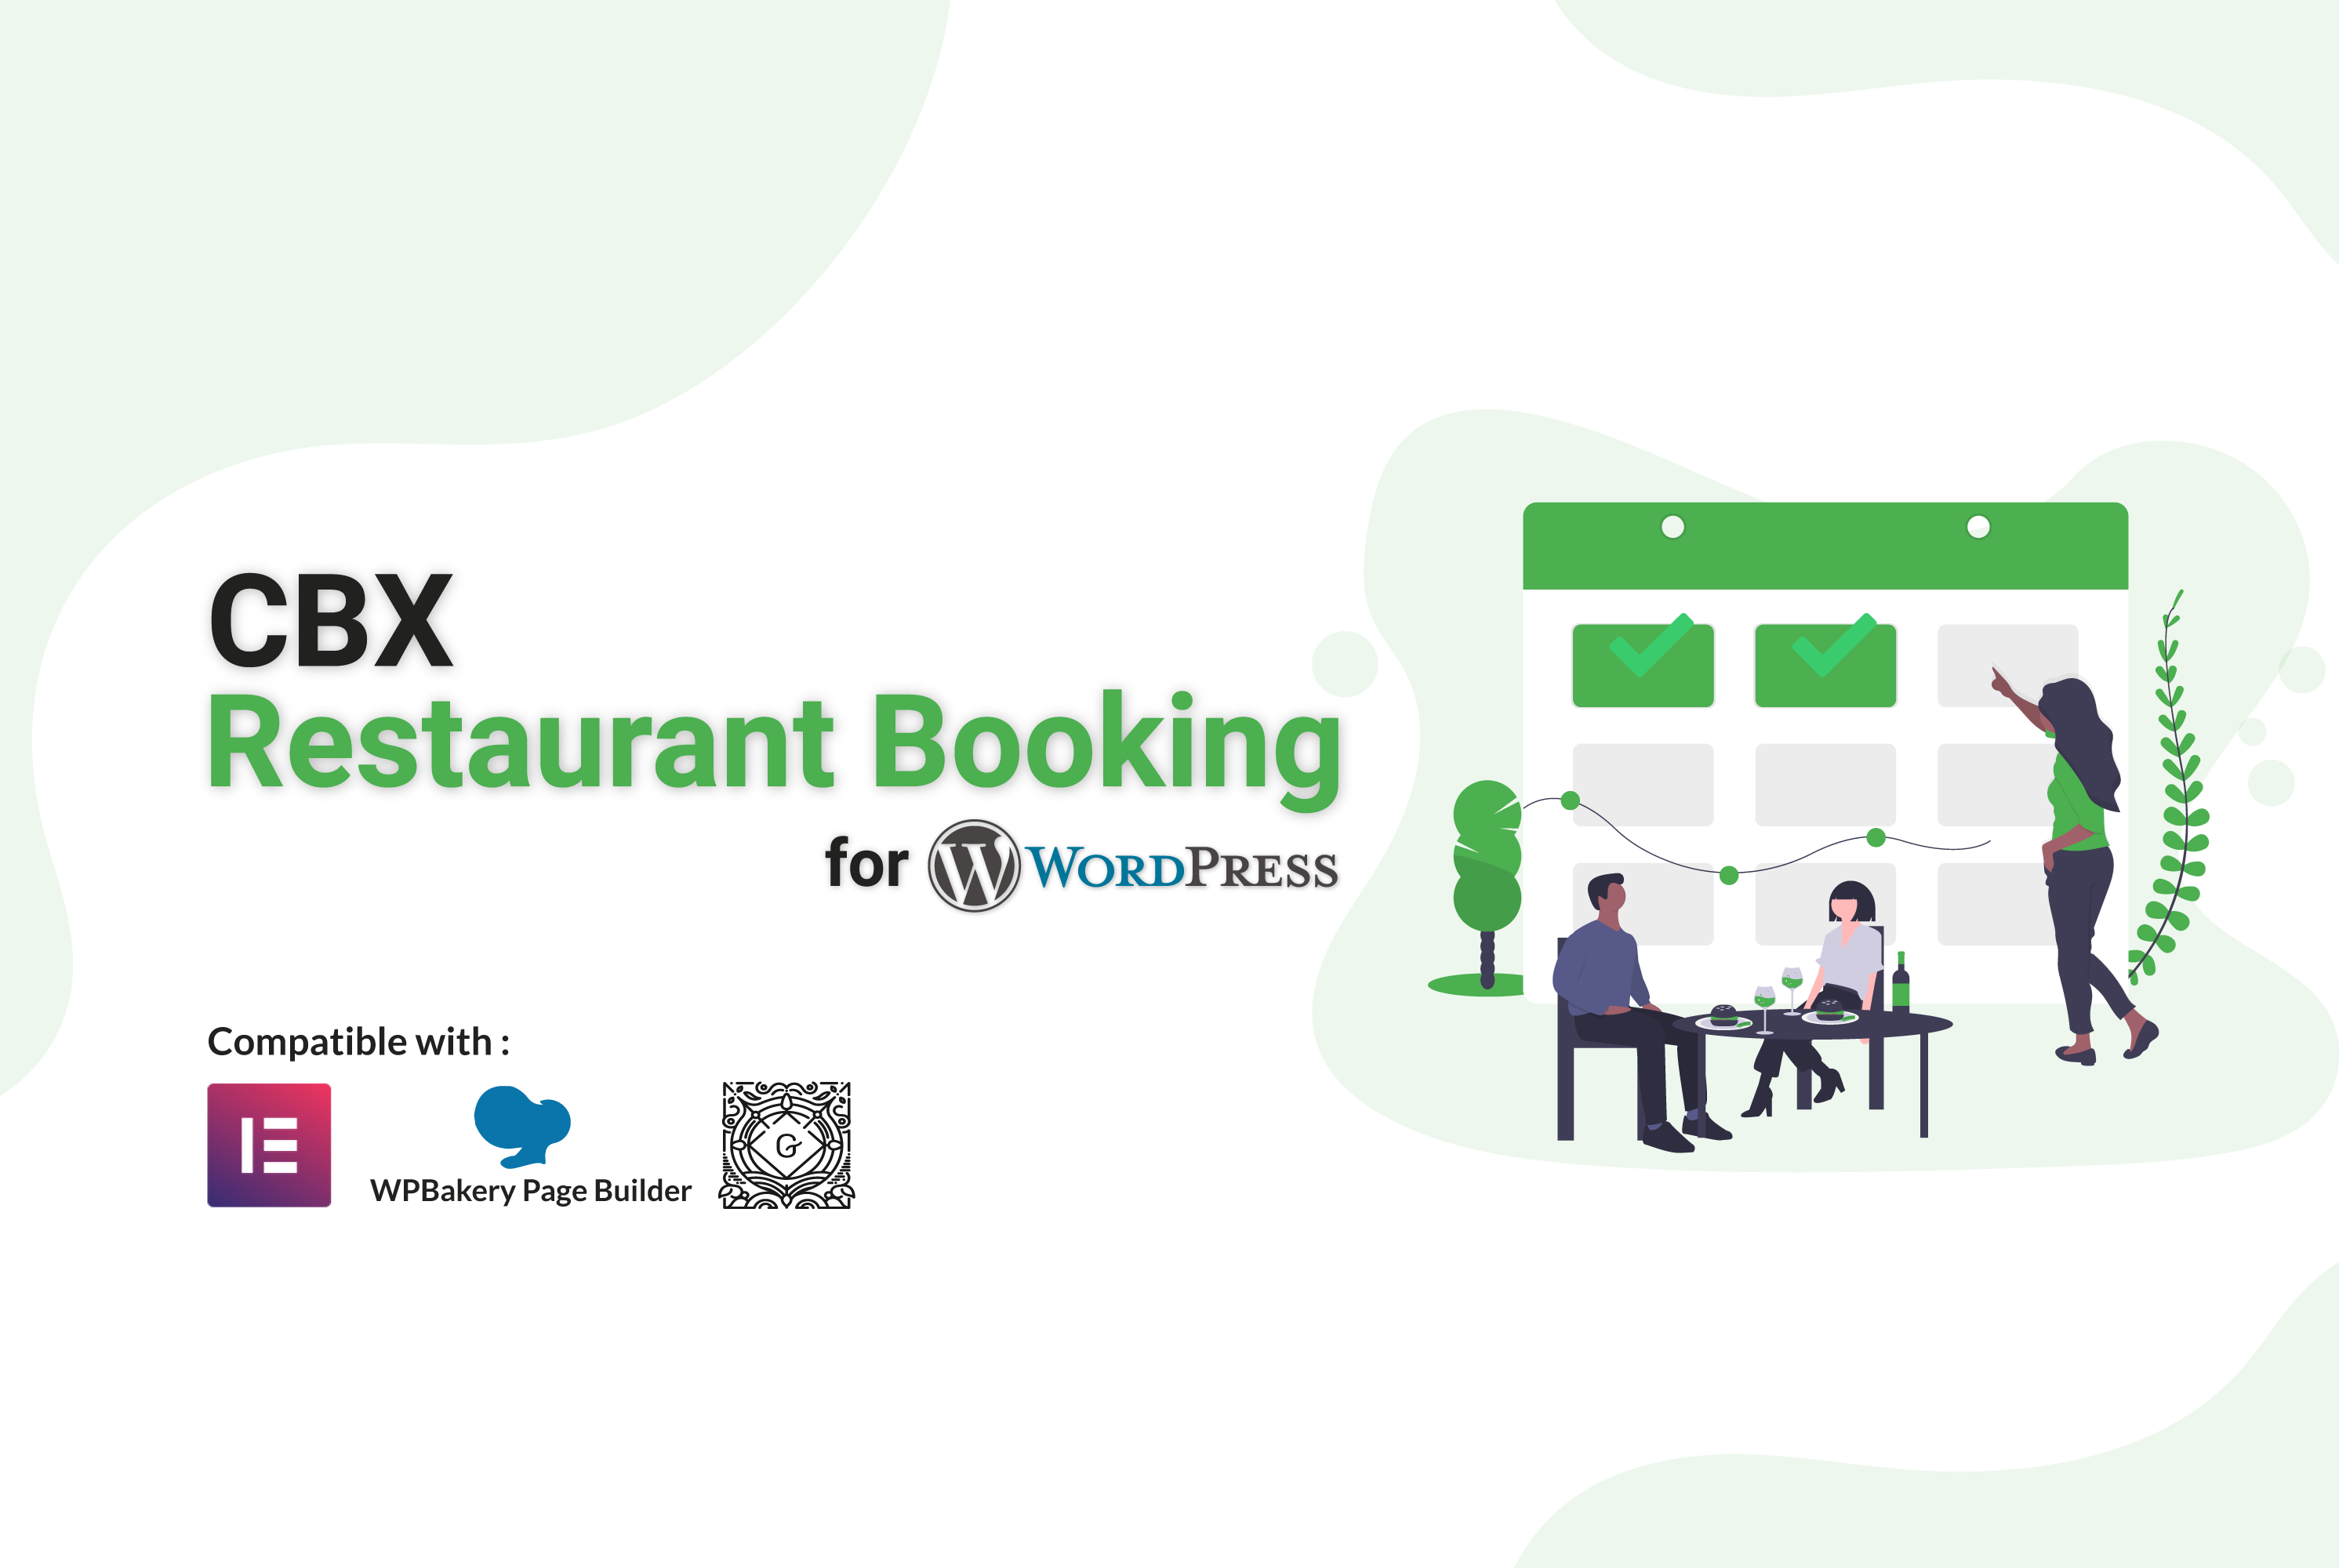 CBX Restaurant Booking for WordPress